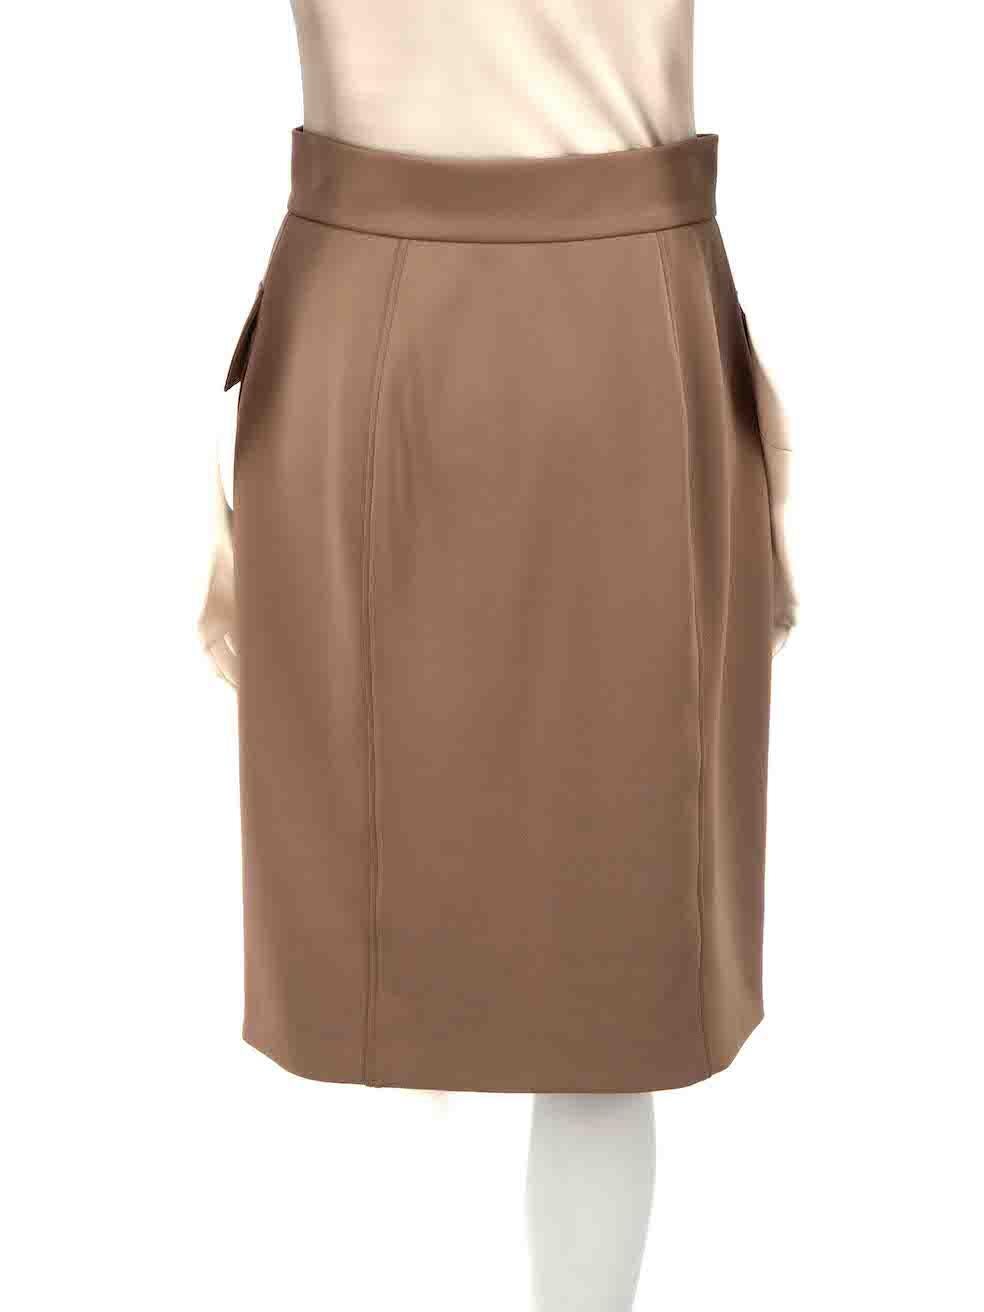 Bottega Veneta Camel Pocket Detail Midi Skirt Size M In Good Condition For Sale In London, GB